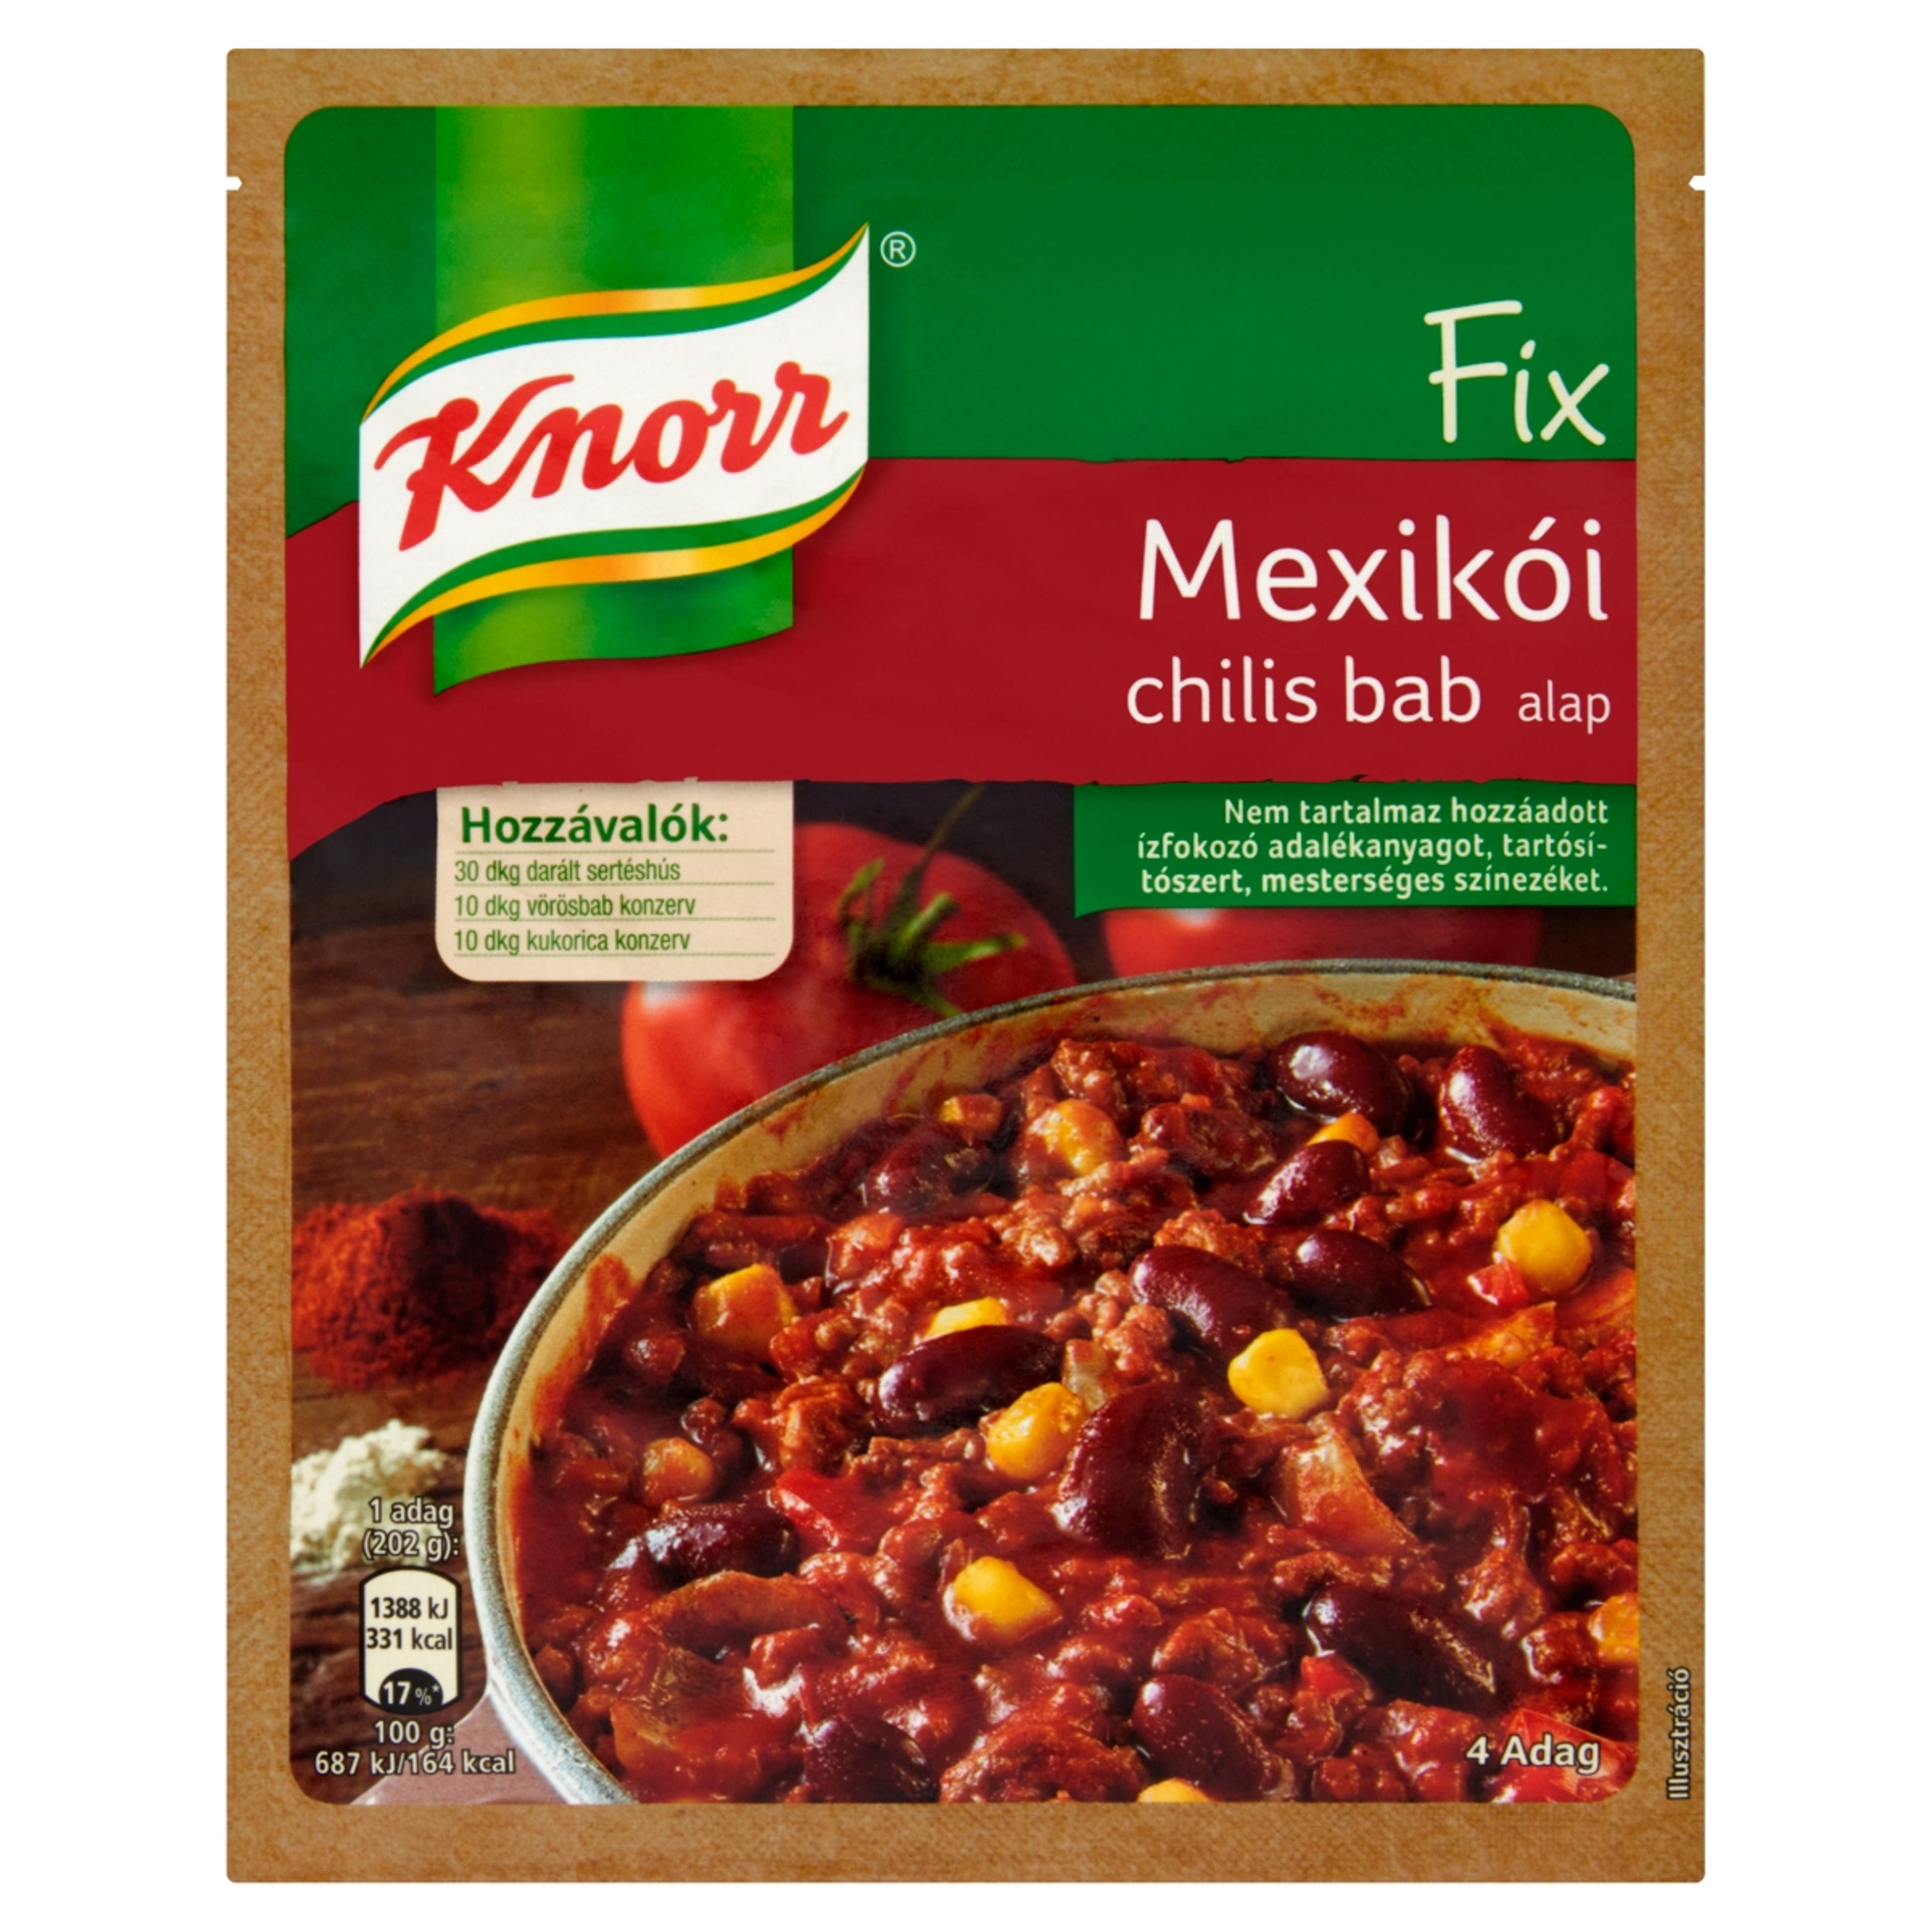 Knorr alap mexikói chilis bab - 50 g-1